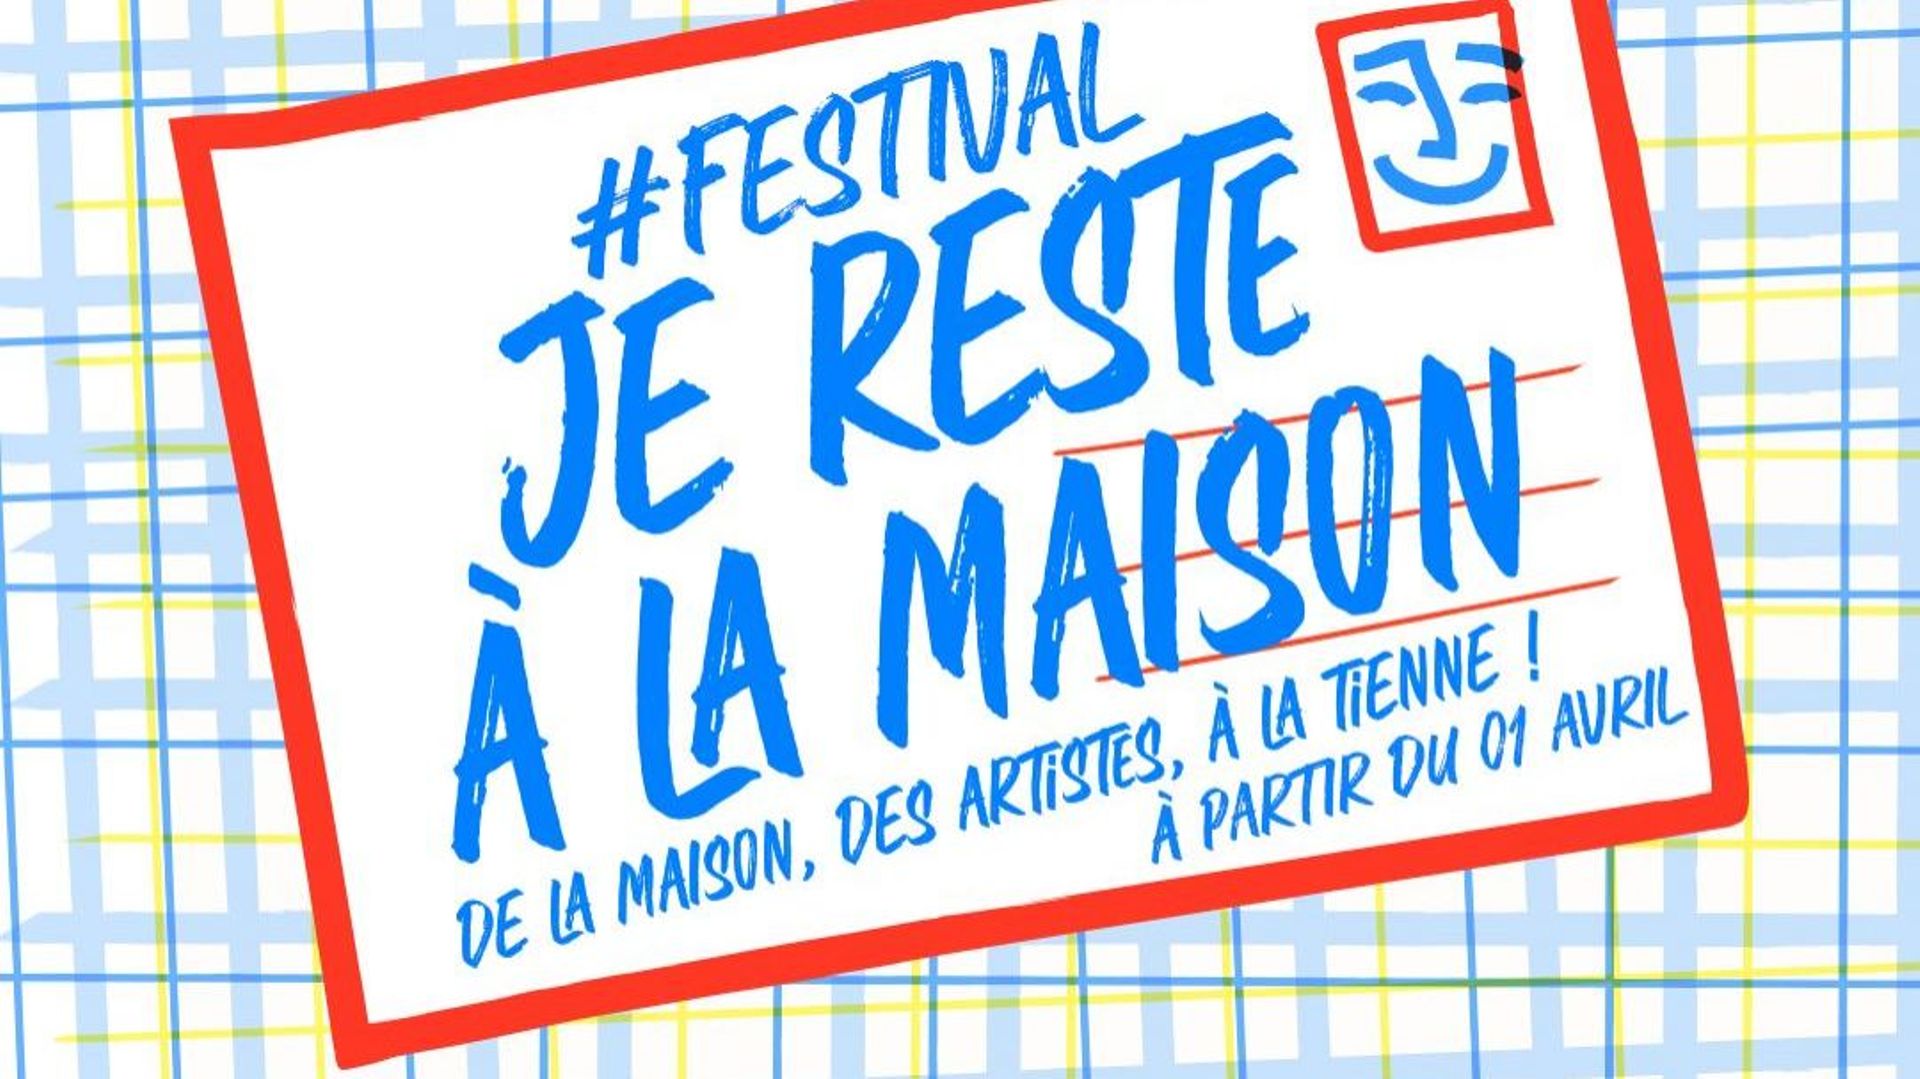 Festival #Jeresteàlamaison